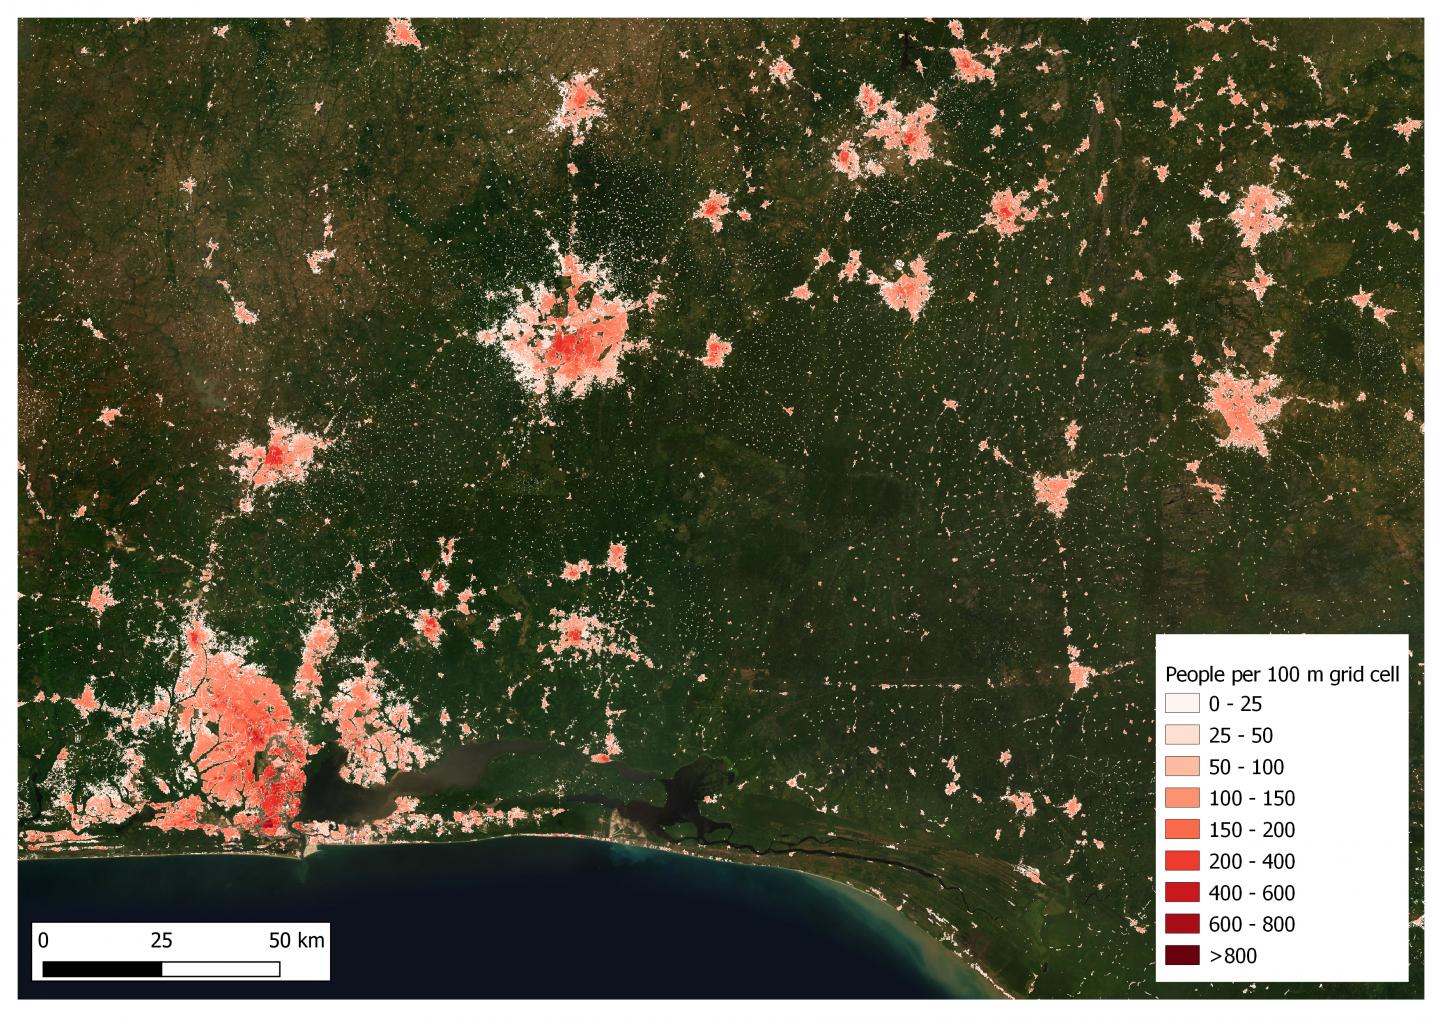 Map of High-Resolution Gridded Population Estimates around Lagos, Nigeria